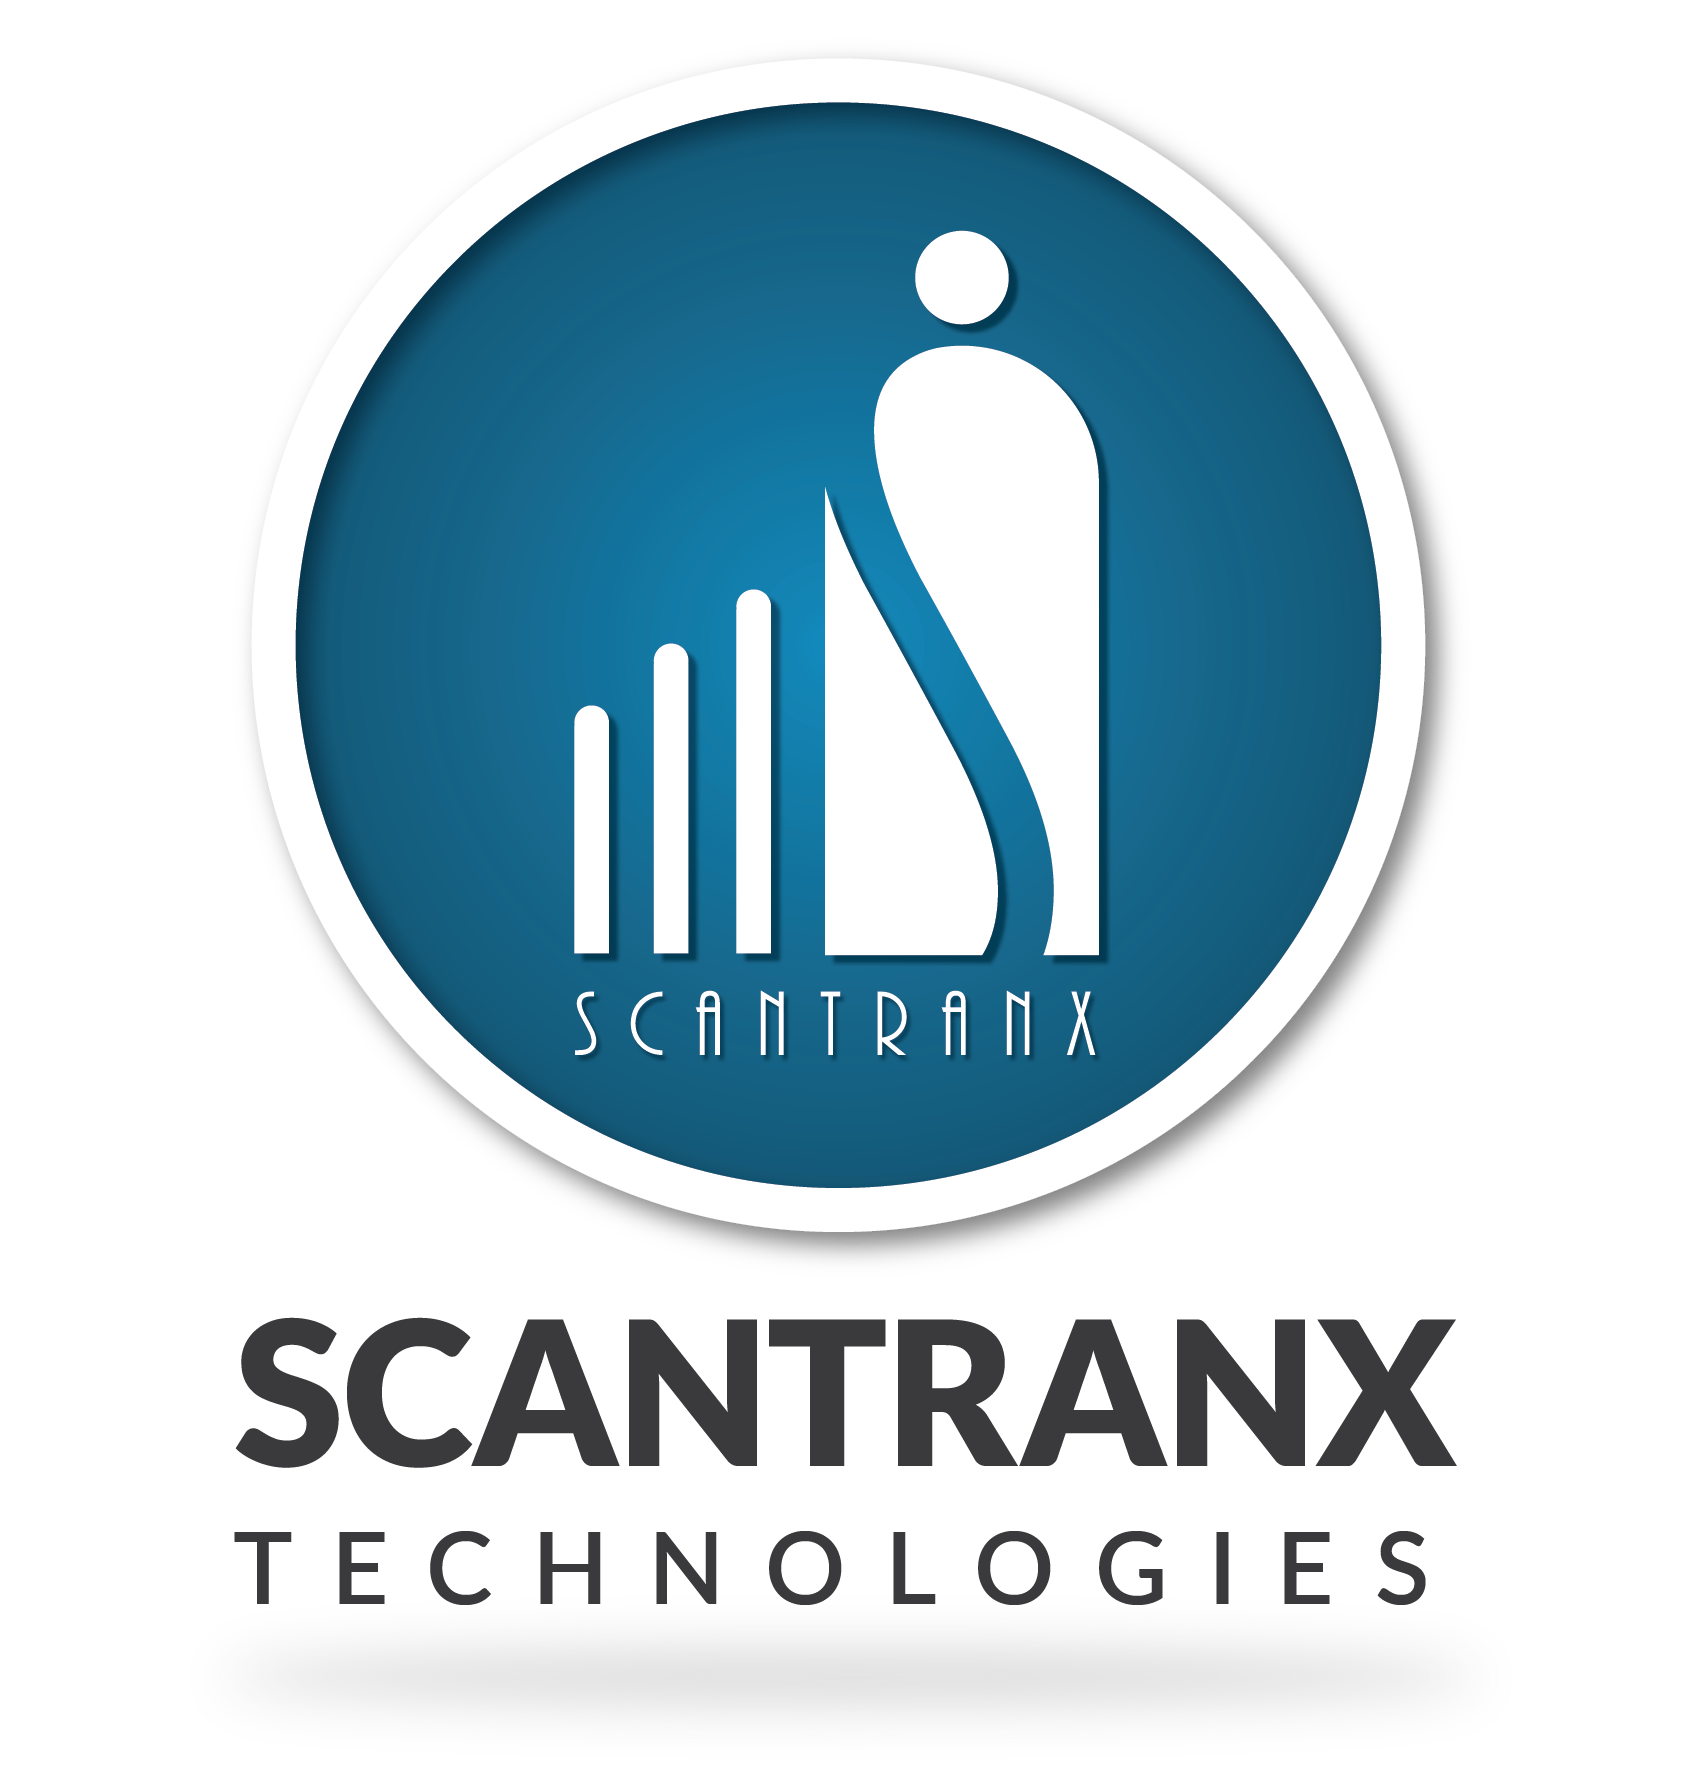 Scantranx Technologies Inc